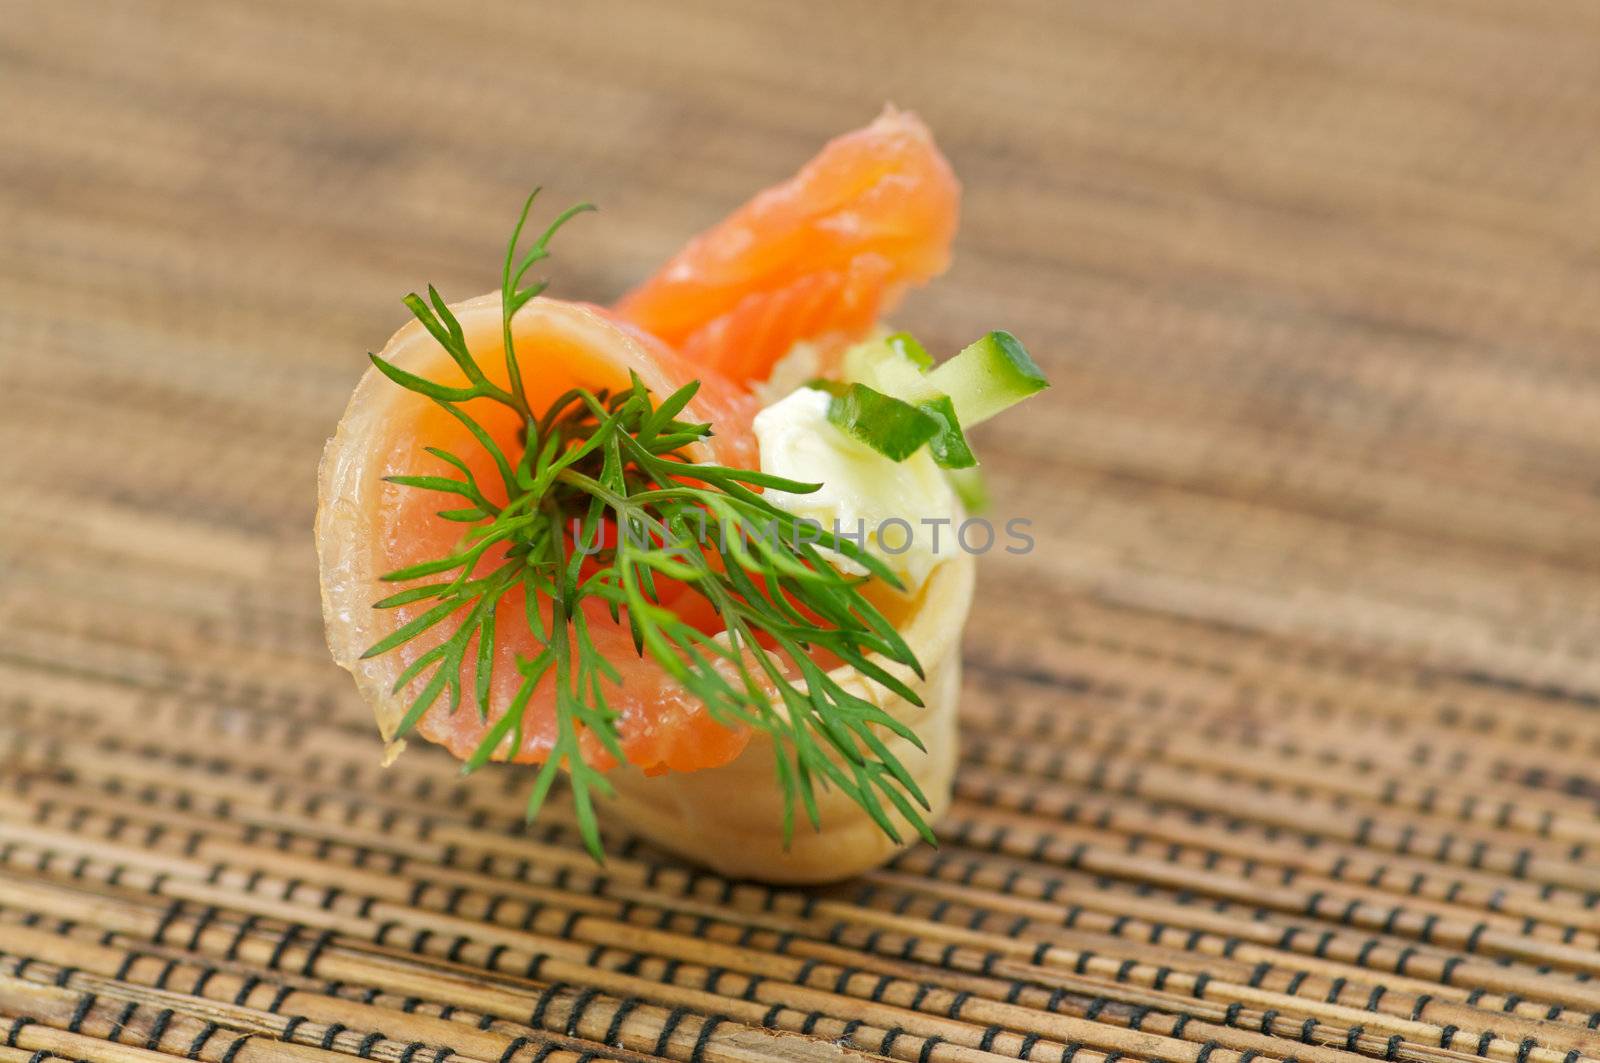 Snack with Smoked Salmon by zhekos